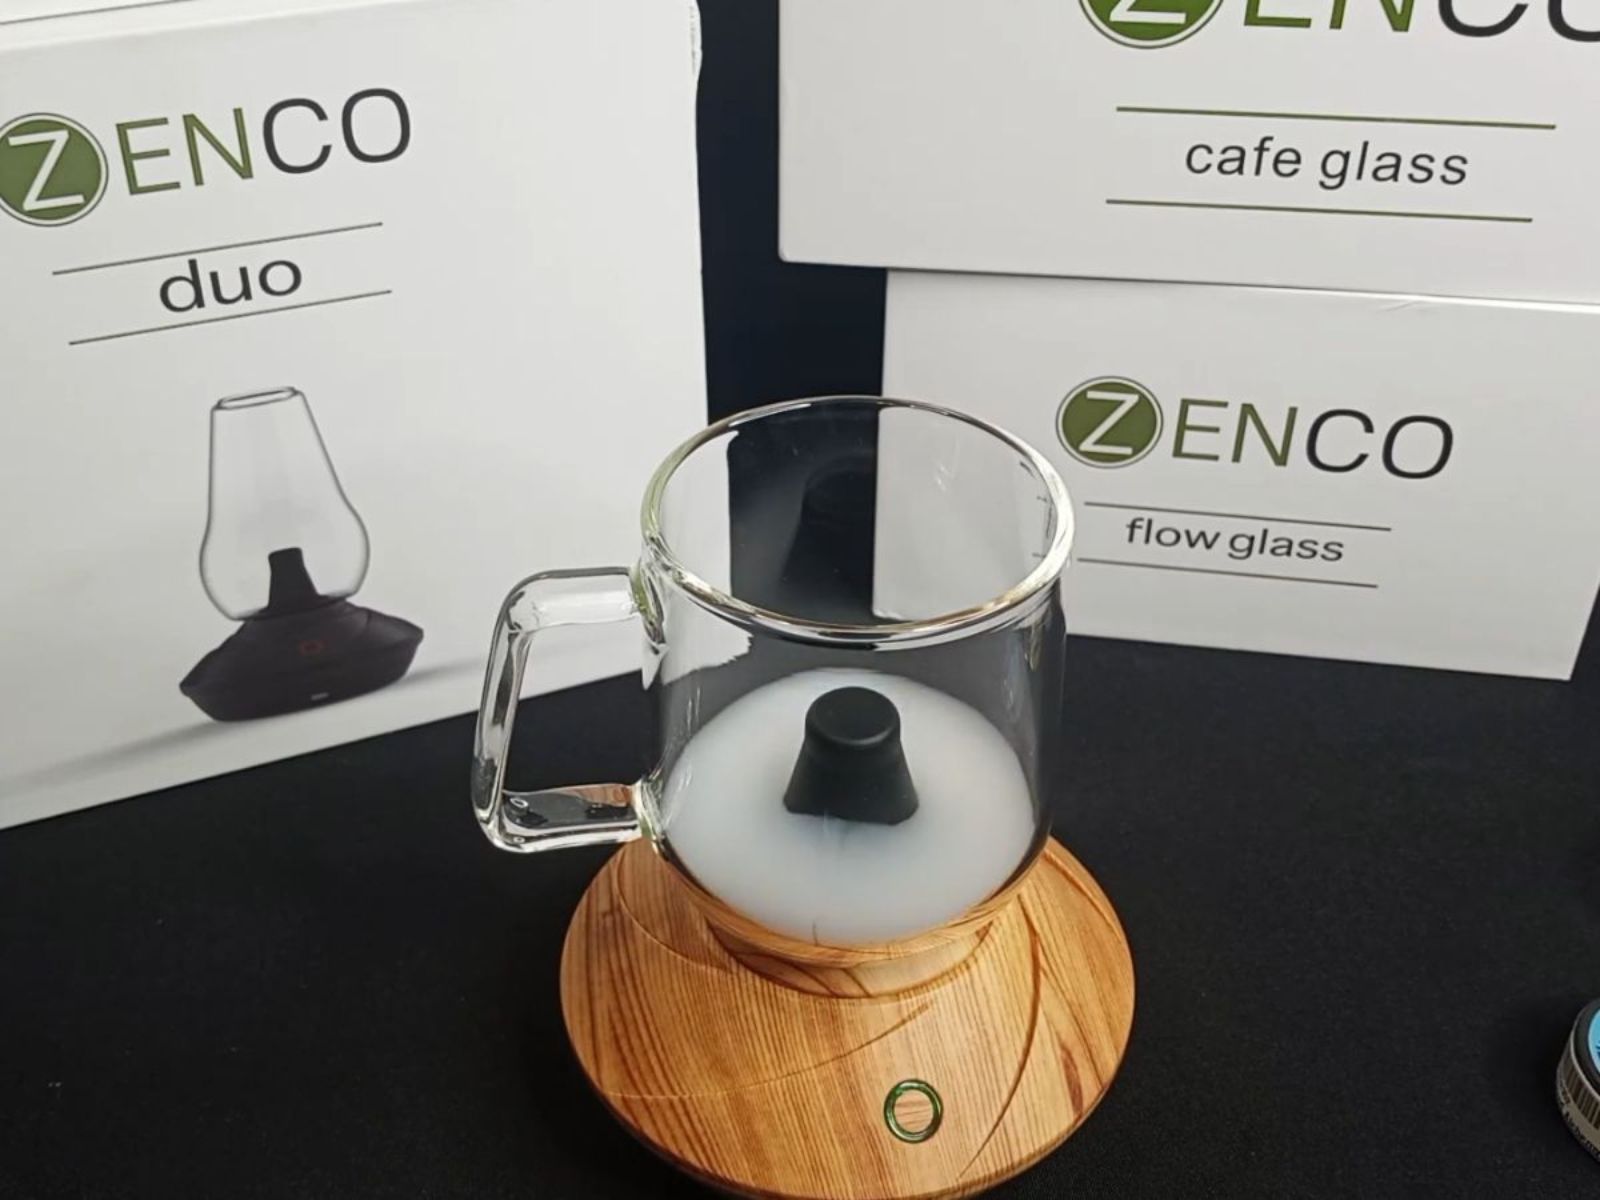 Zenco Duo Flow Cafe Glass Device Attachment